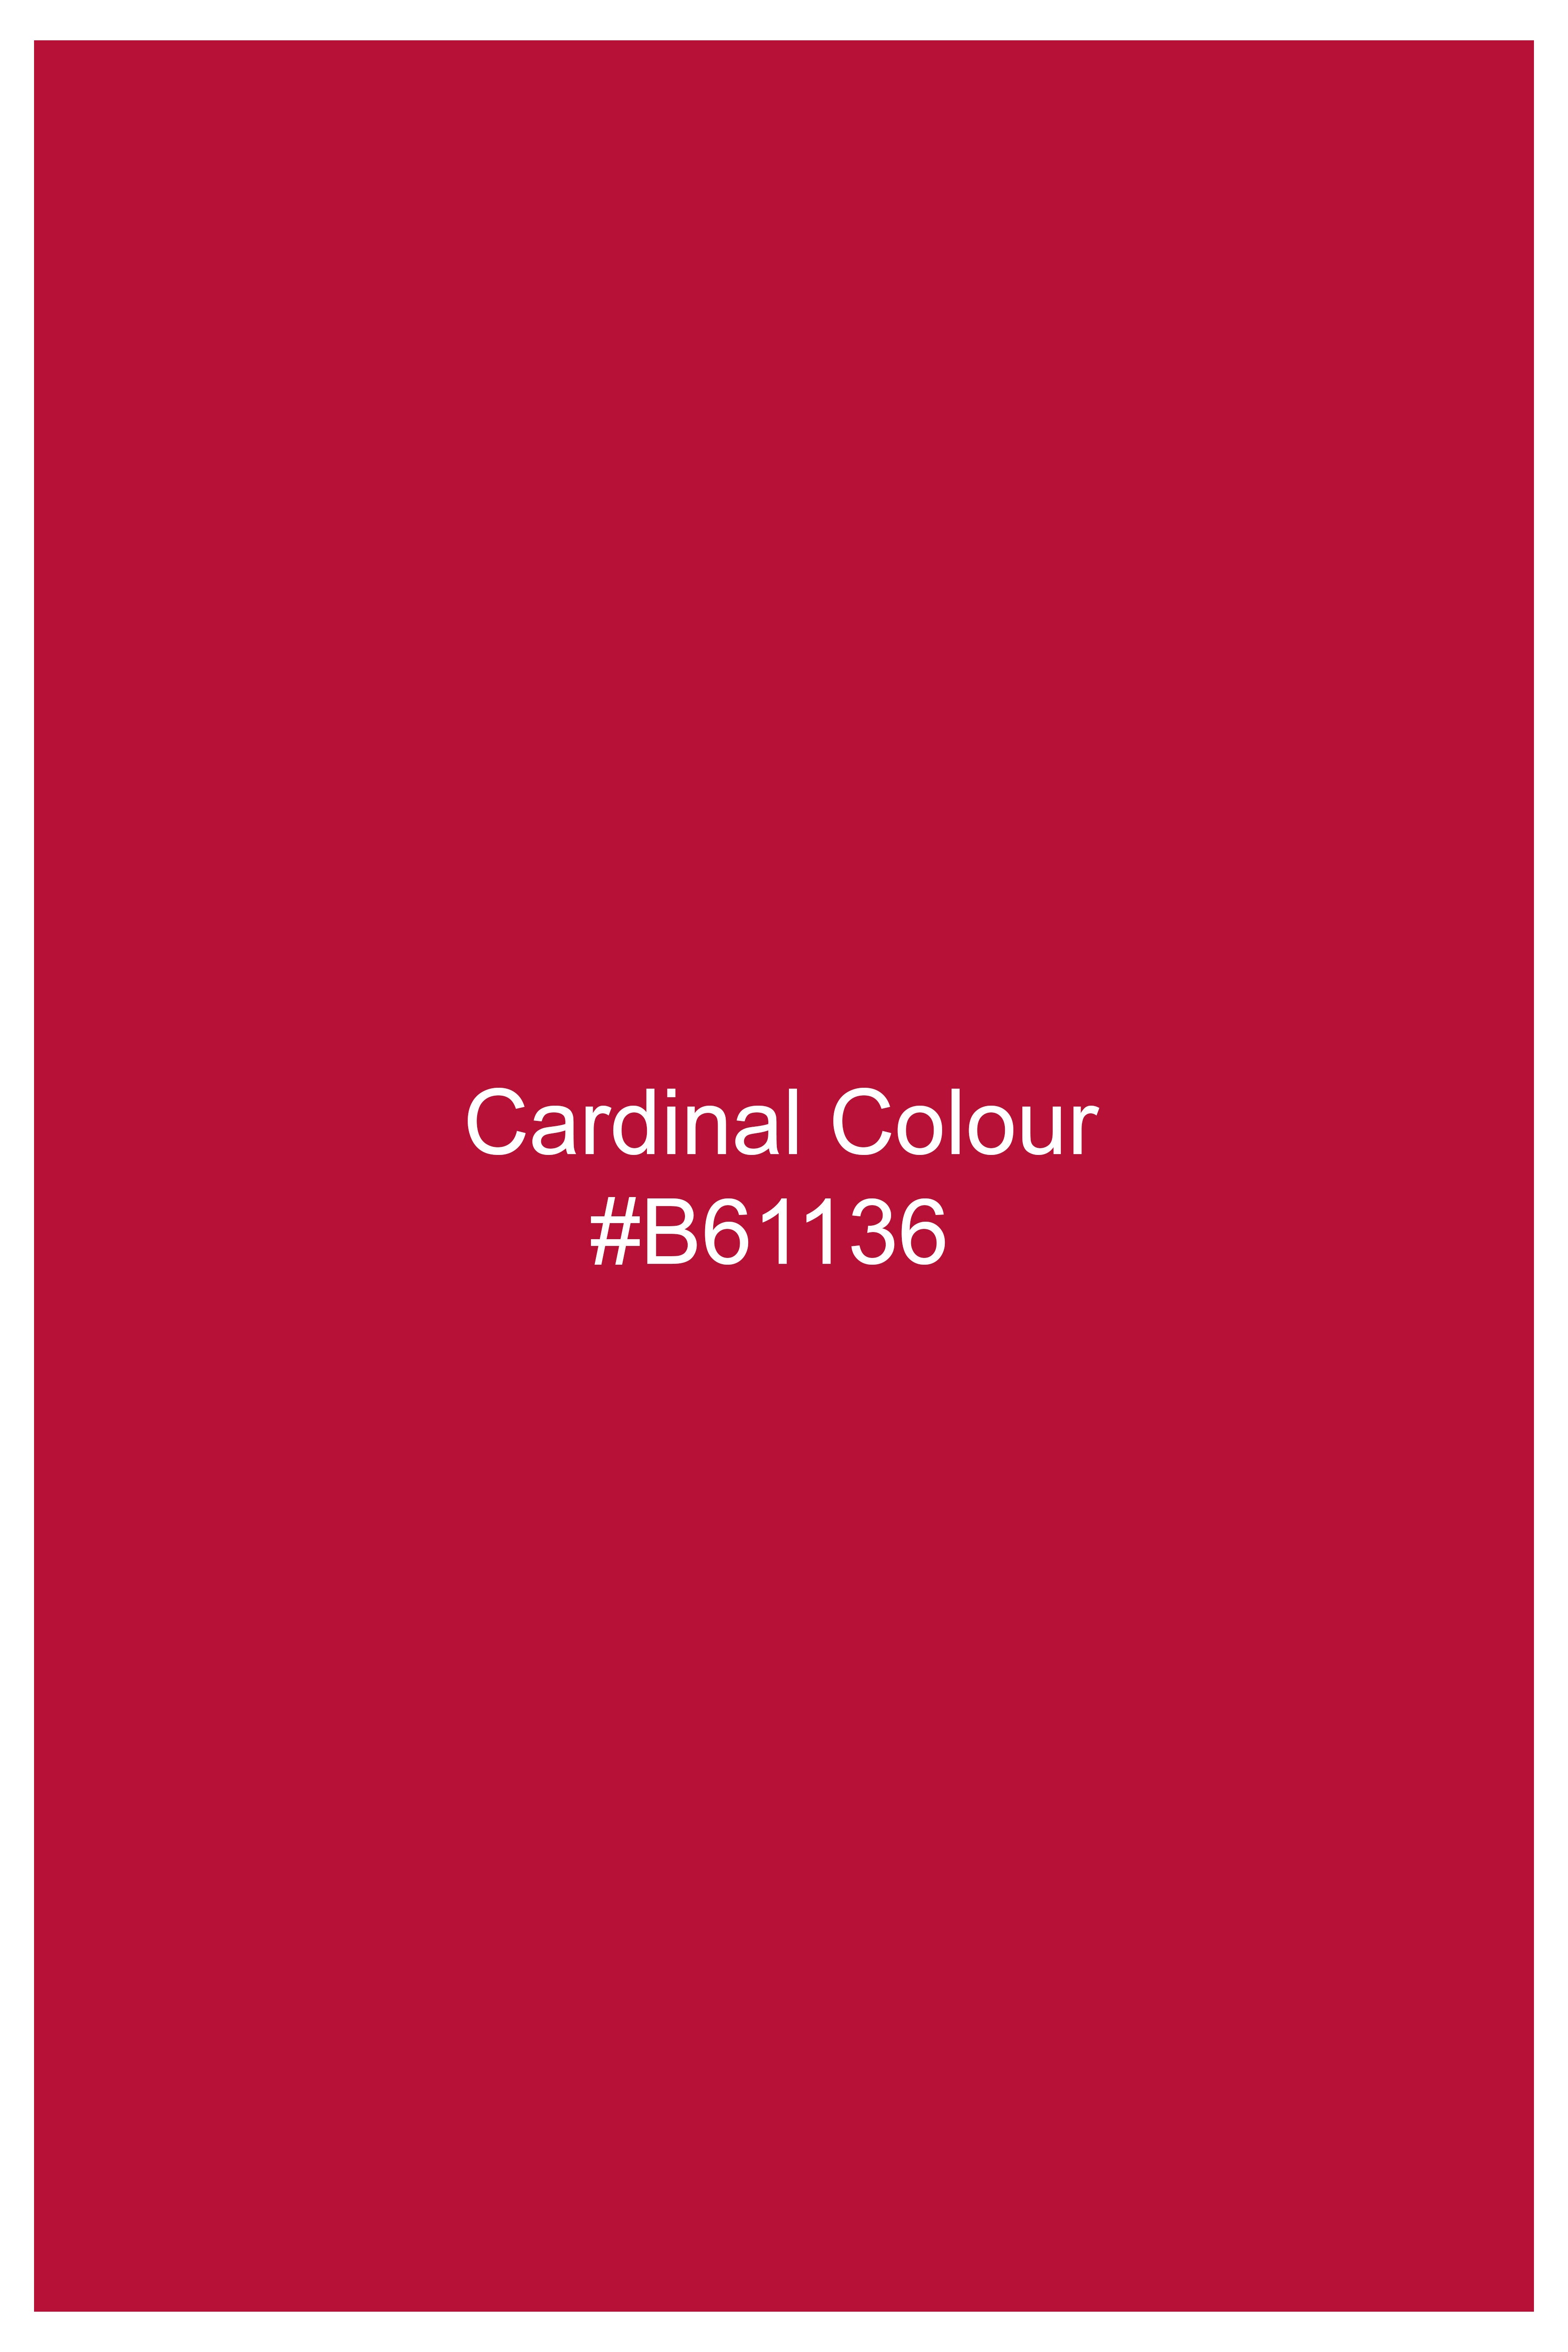 Cardinal Red Hand Painted Twill Premium Cotton Designer Shirt 9190-MN-ART-38, 9190-MN-ART-H-38, 9190-MN-ART-39, 9190-MN-ART-H-39, 9190-MN-ART-40, 9190-MN-ART-H-40, 9190-MN-ART-42, 9190-MN-ART-H-42, 9190-MN-ART-44, 9190-MN-ART-H-44, 9190-MN-ART-46, 9190-MN-ART-H-46, 9190-MN-ART-48, 9190-MN-ART-H-48, 9190-MN-ART-50, 9190-MN-ART-H-50, 9190-MN-ART-52, 9190-MN-ART-H-52